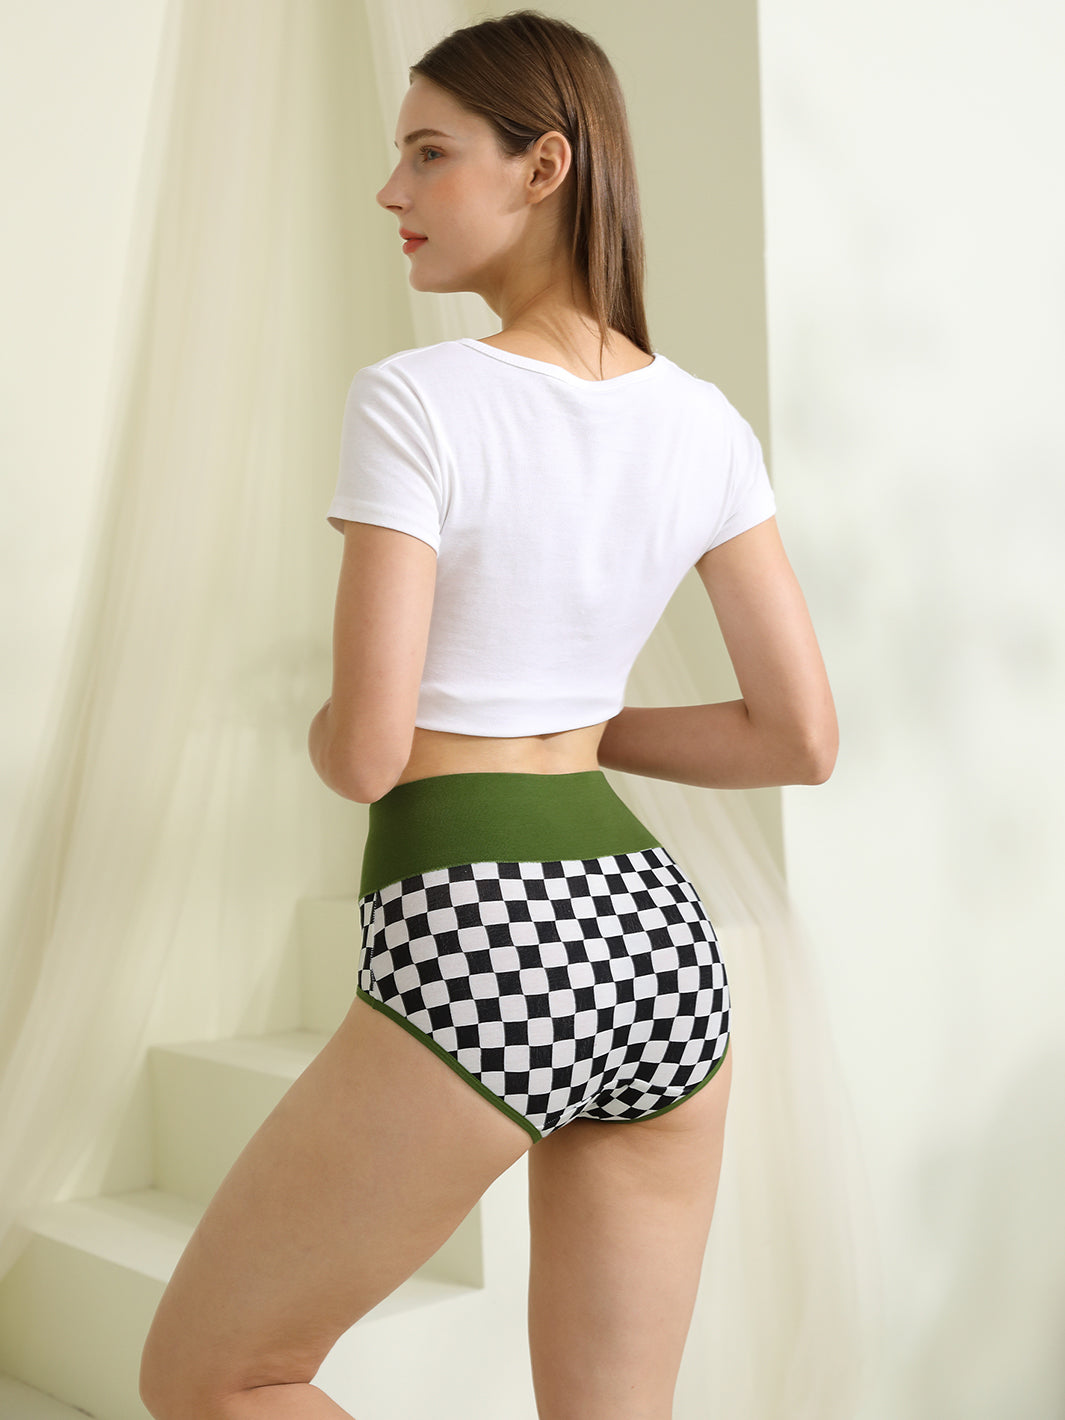 INNERSY Women's Plus Size XL-5XL Cotton Underwear High Waisted